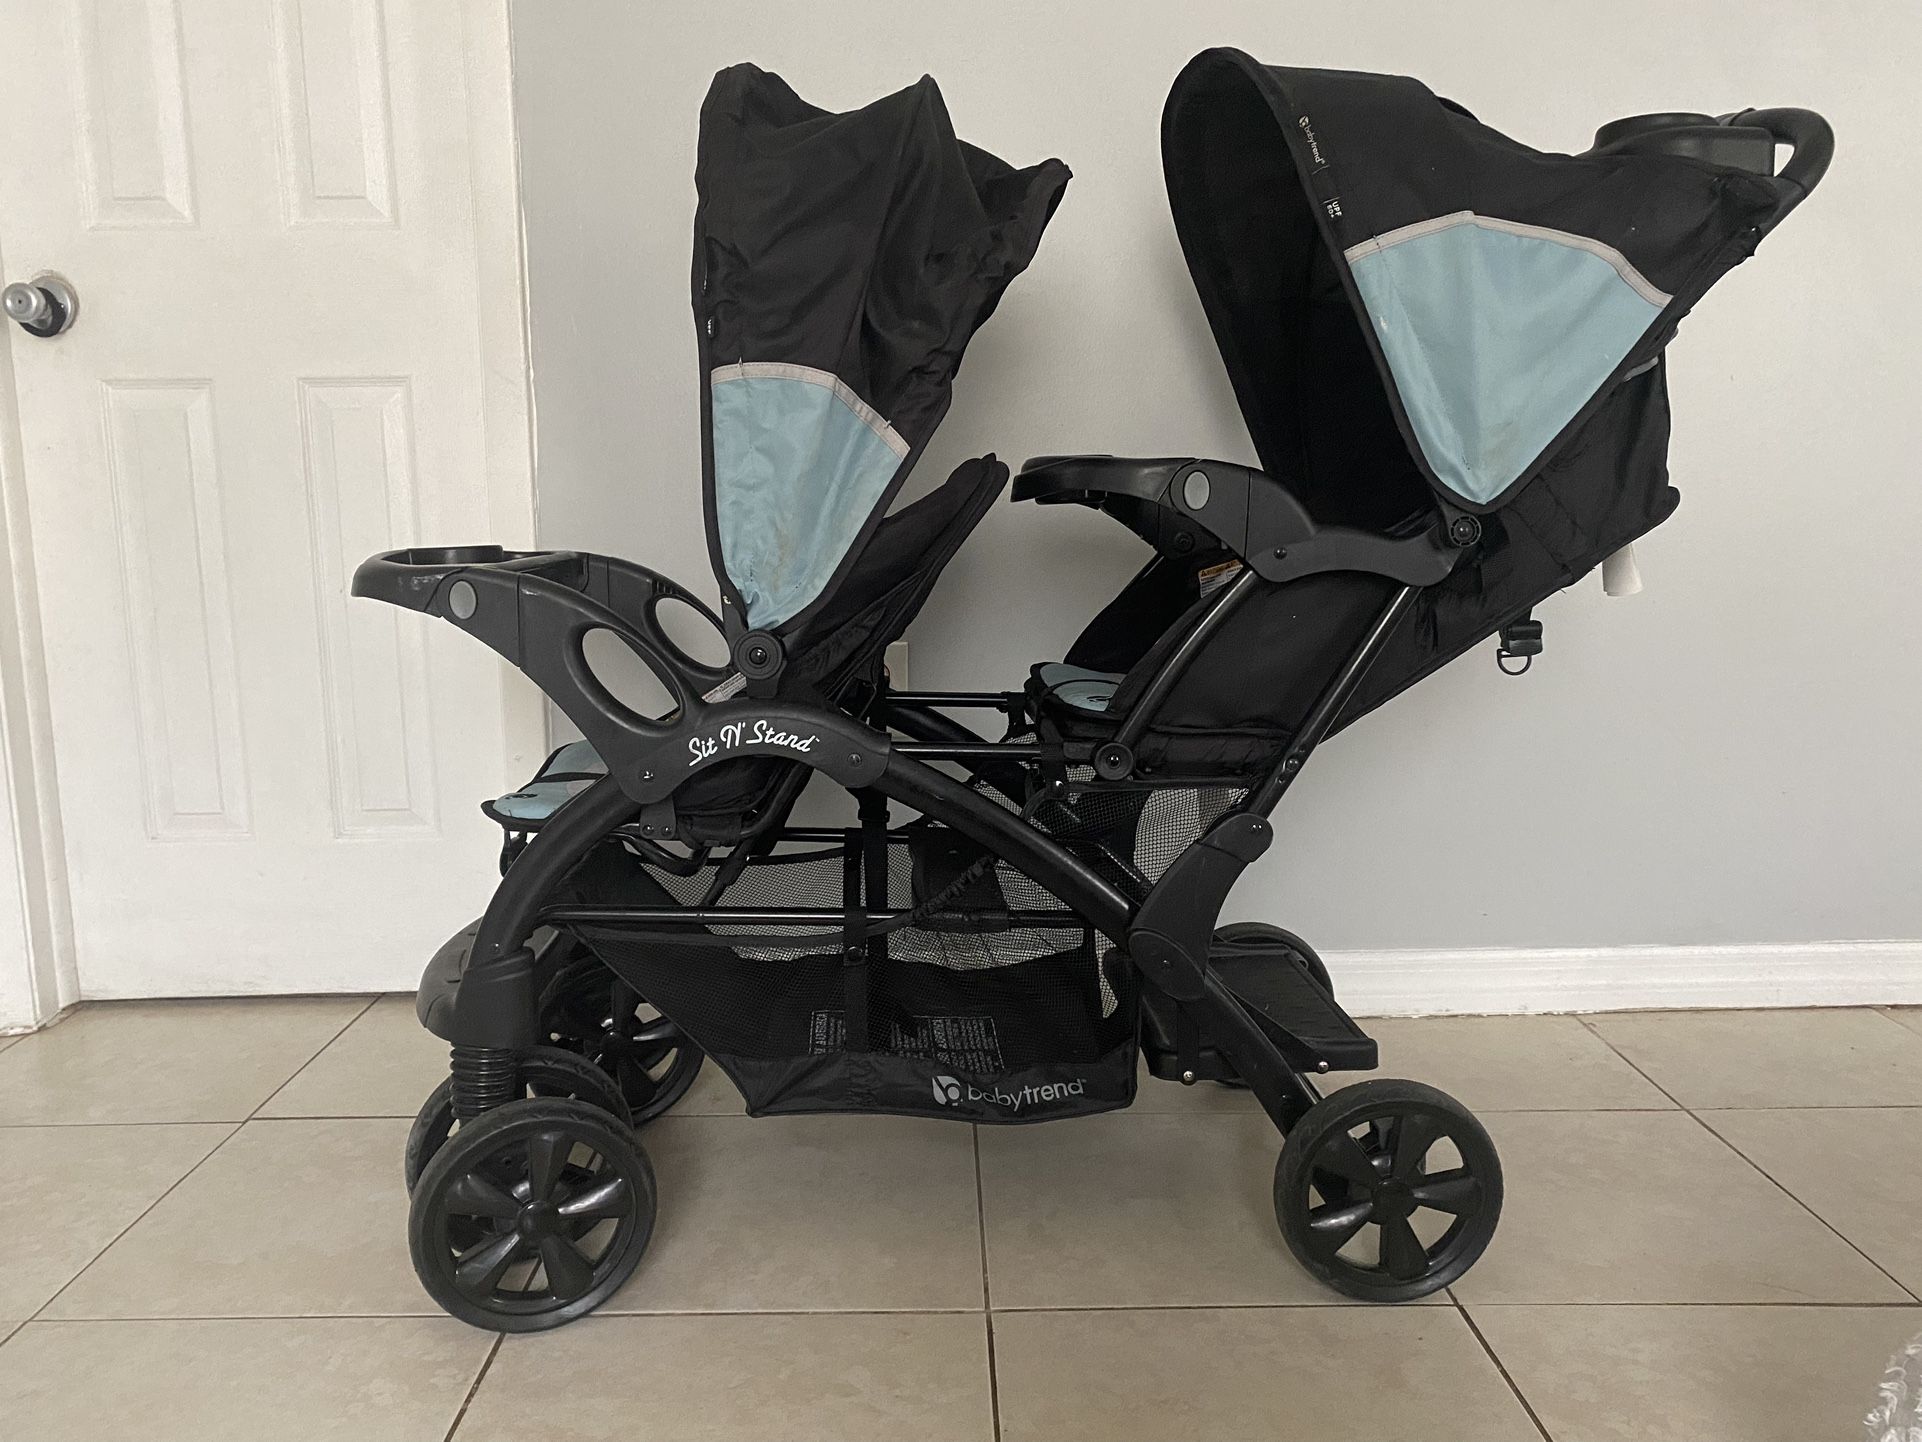 Babytrend Double Stroller